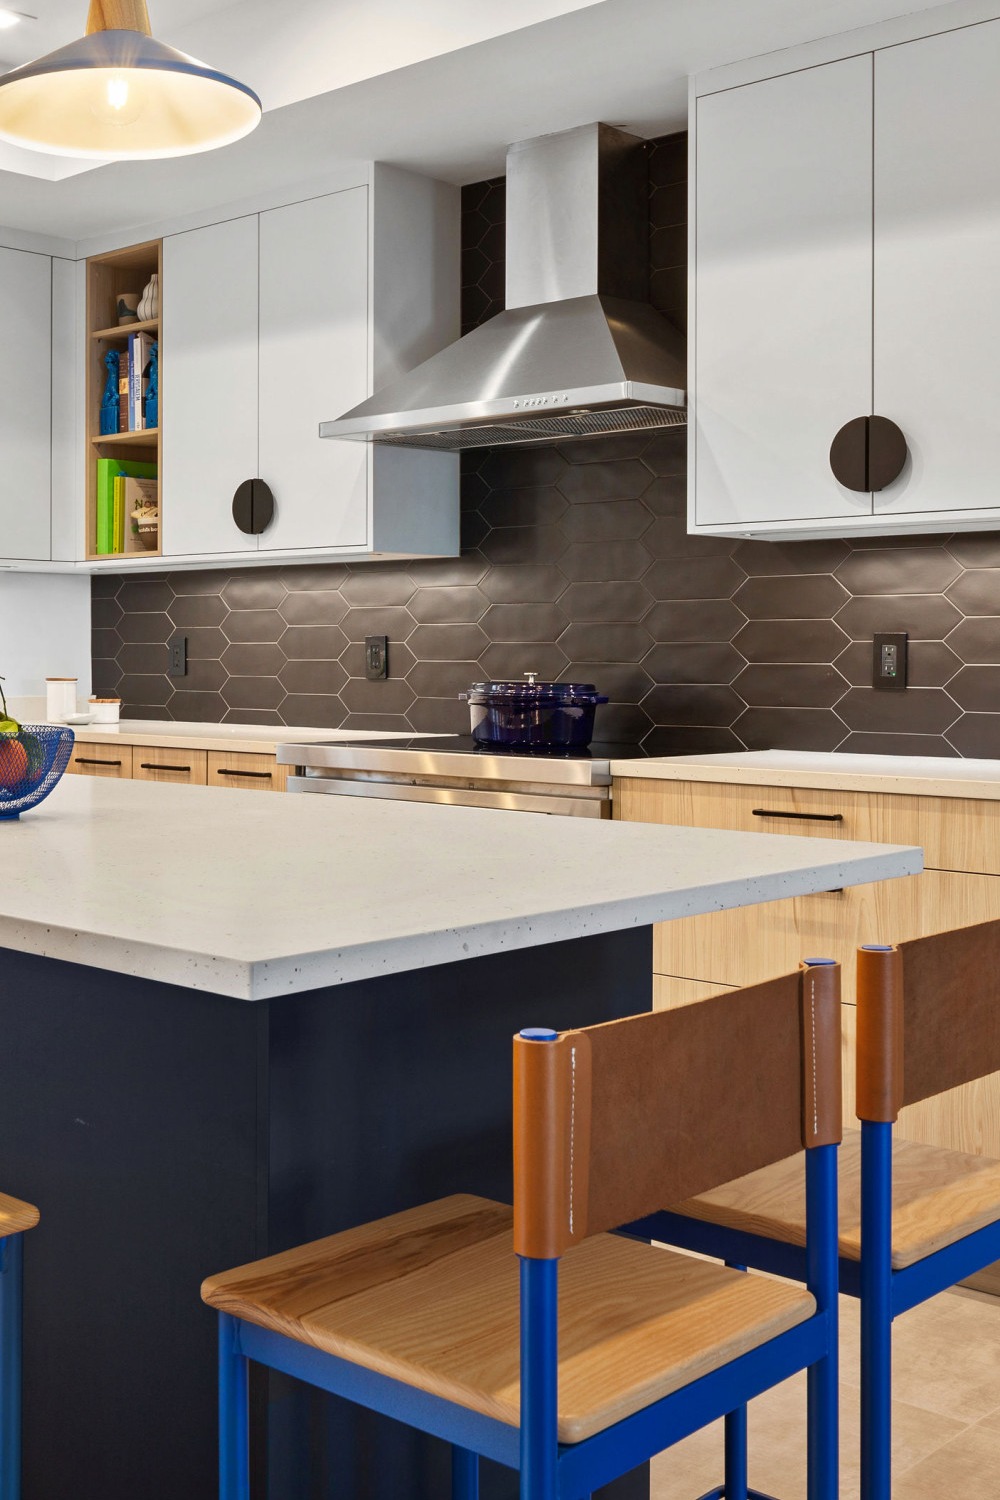 Gray Kitchen Backsplash Ideas Crisp White Quartz Countertops Space Design Natural Warm Material Ceiling Black Sleek Interior Lights